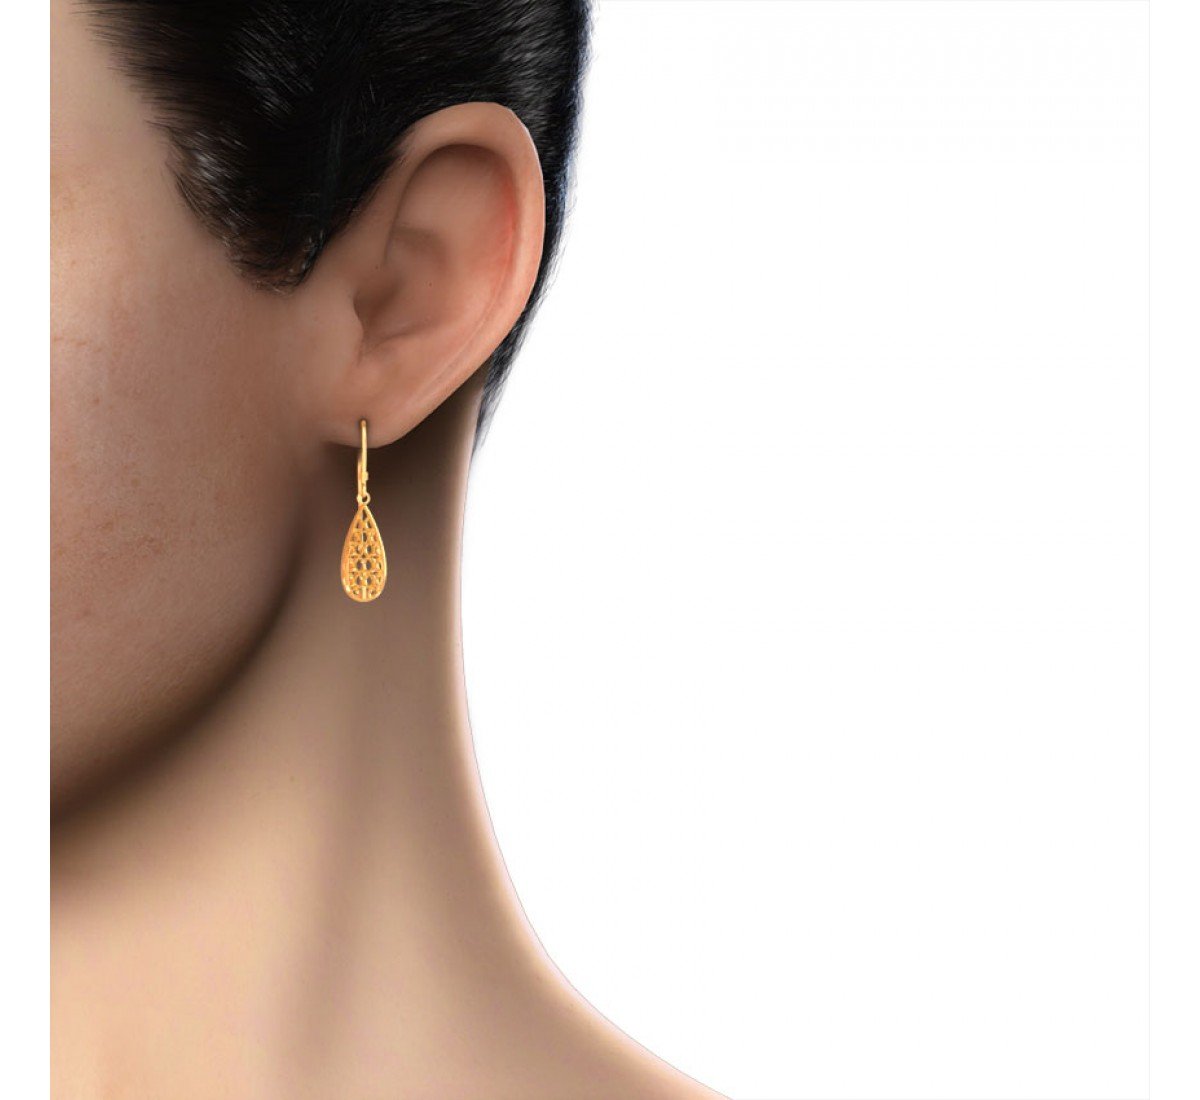 Iuphoria Olinda Gold Earrings